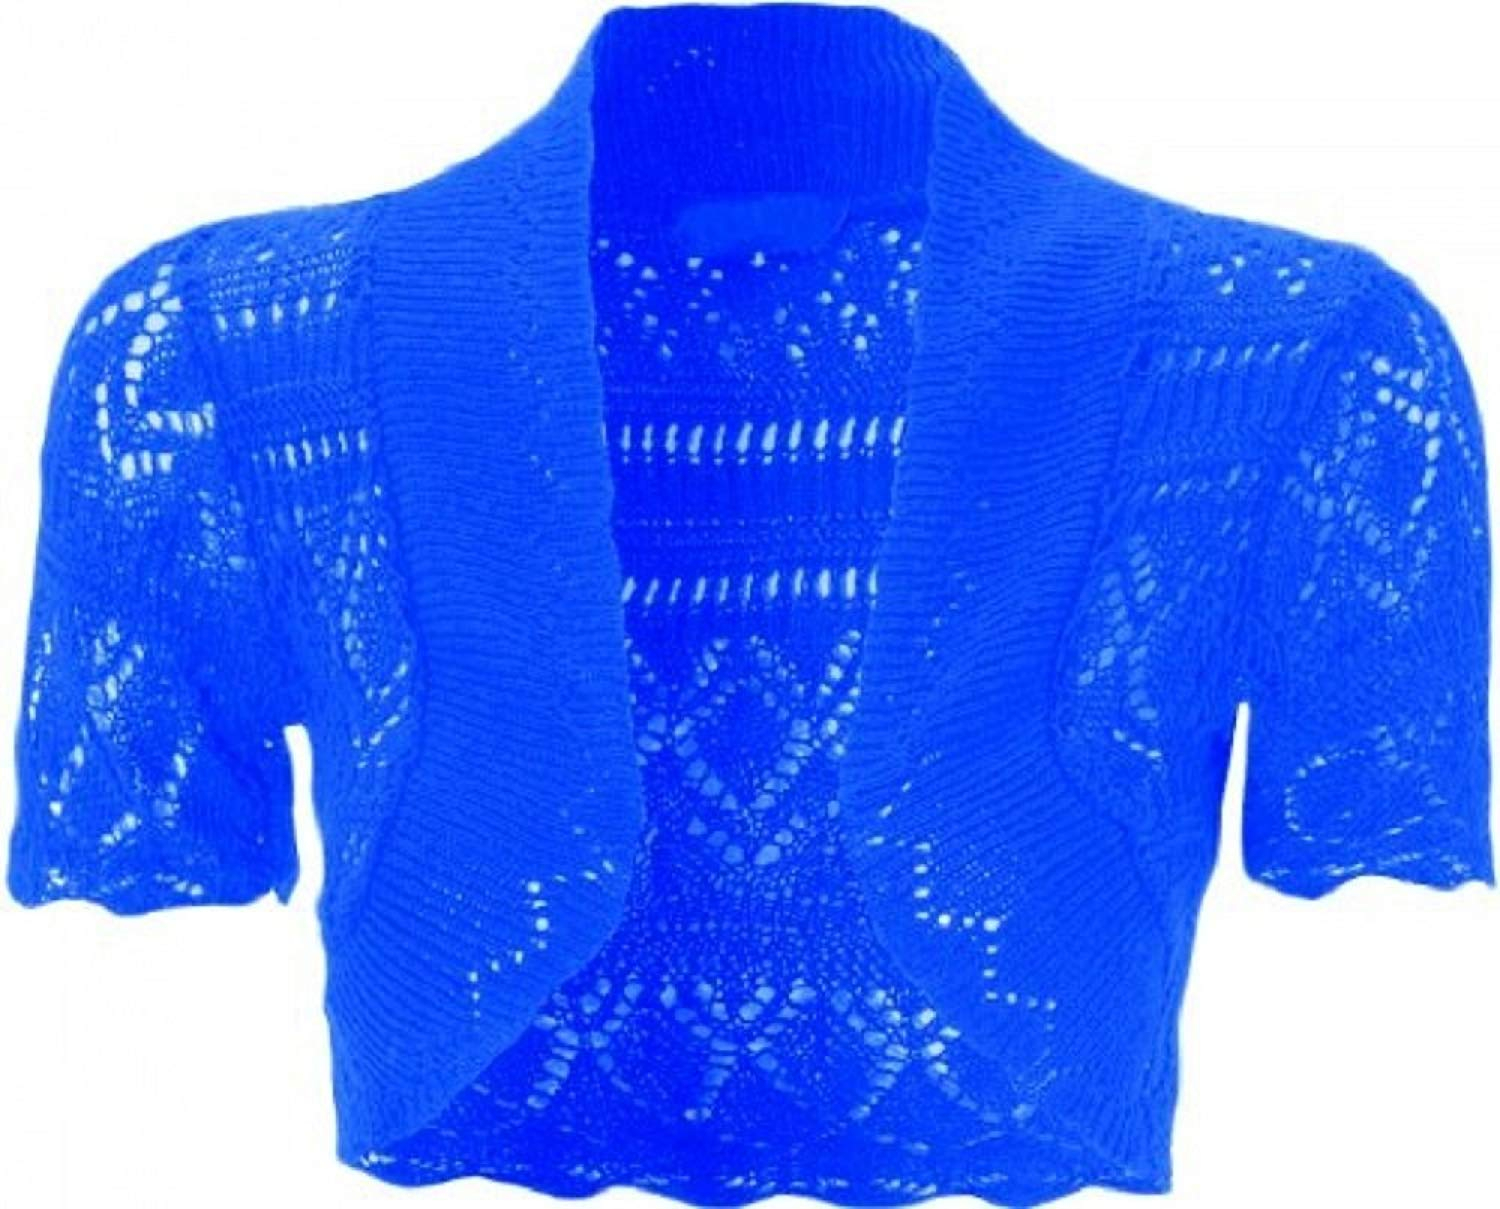 Crochet Shrug Plus Size Pattern Cheap Crochet Shrug Plus Size Pattern Find Crochet Shrug Plus Size